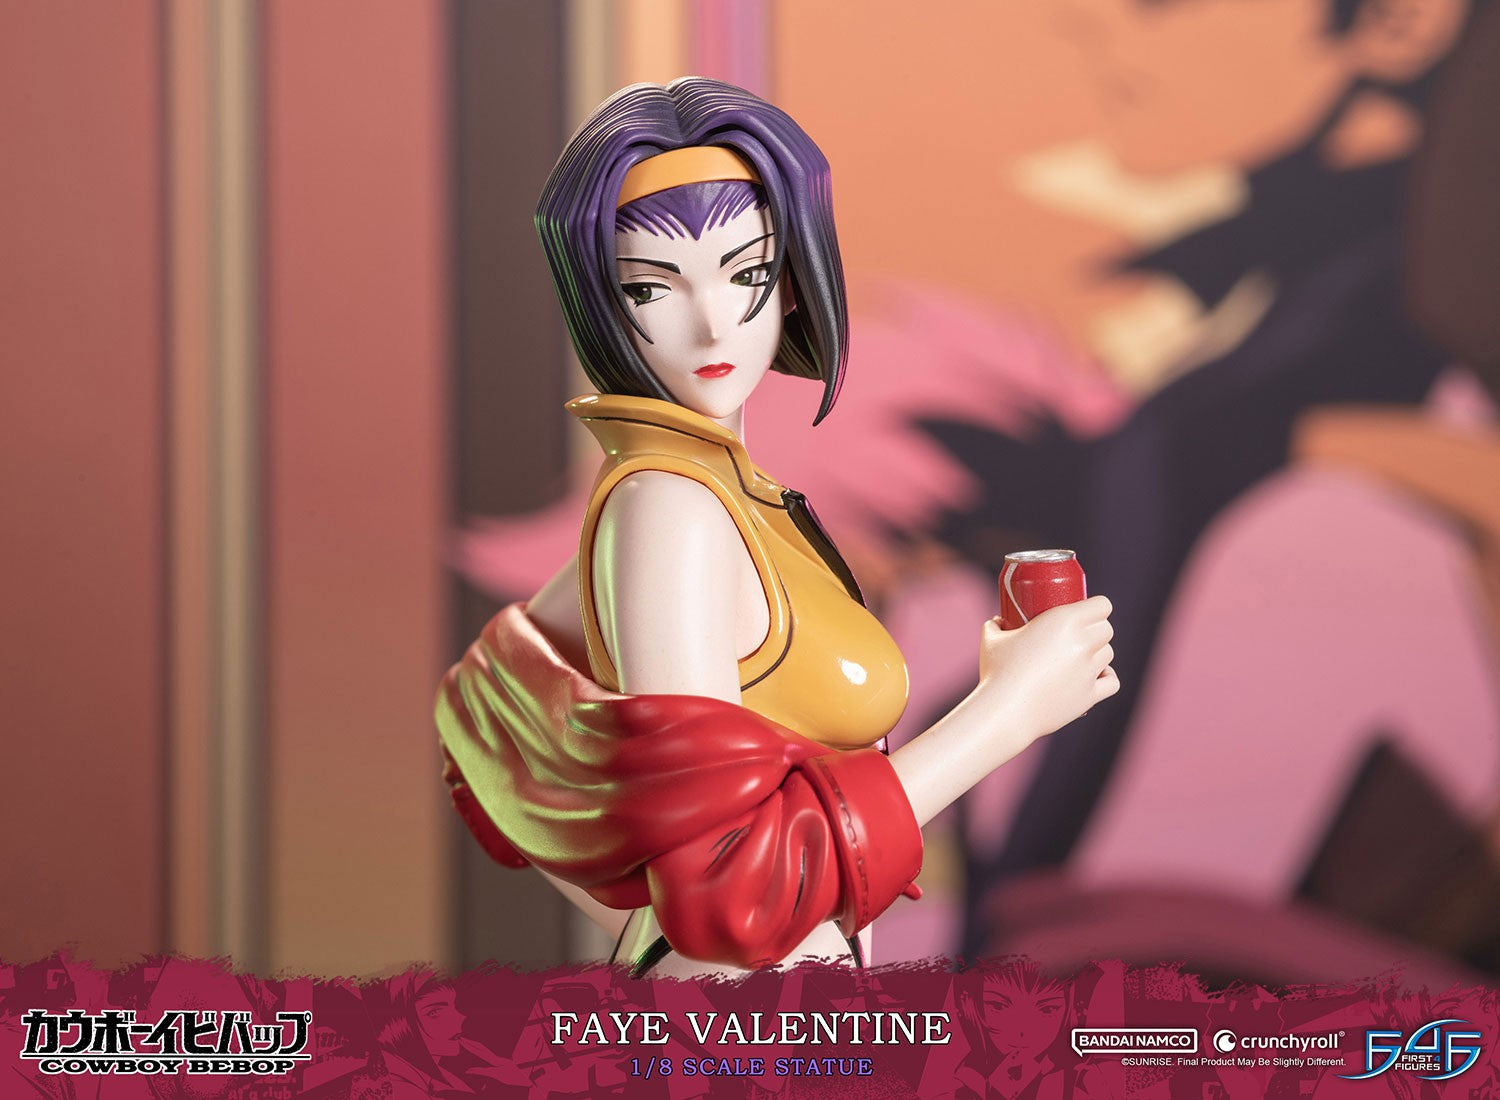 First 4 Figures - Cowboy Bebop - Faye Valentine (1/8 Scale) - Marvelous Toys